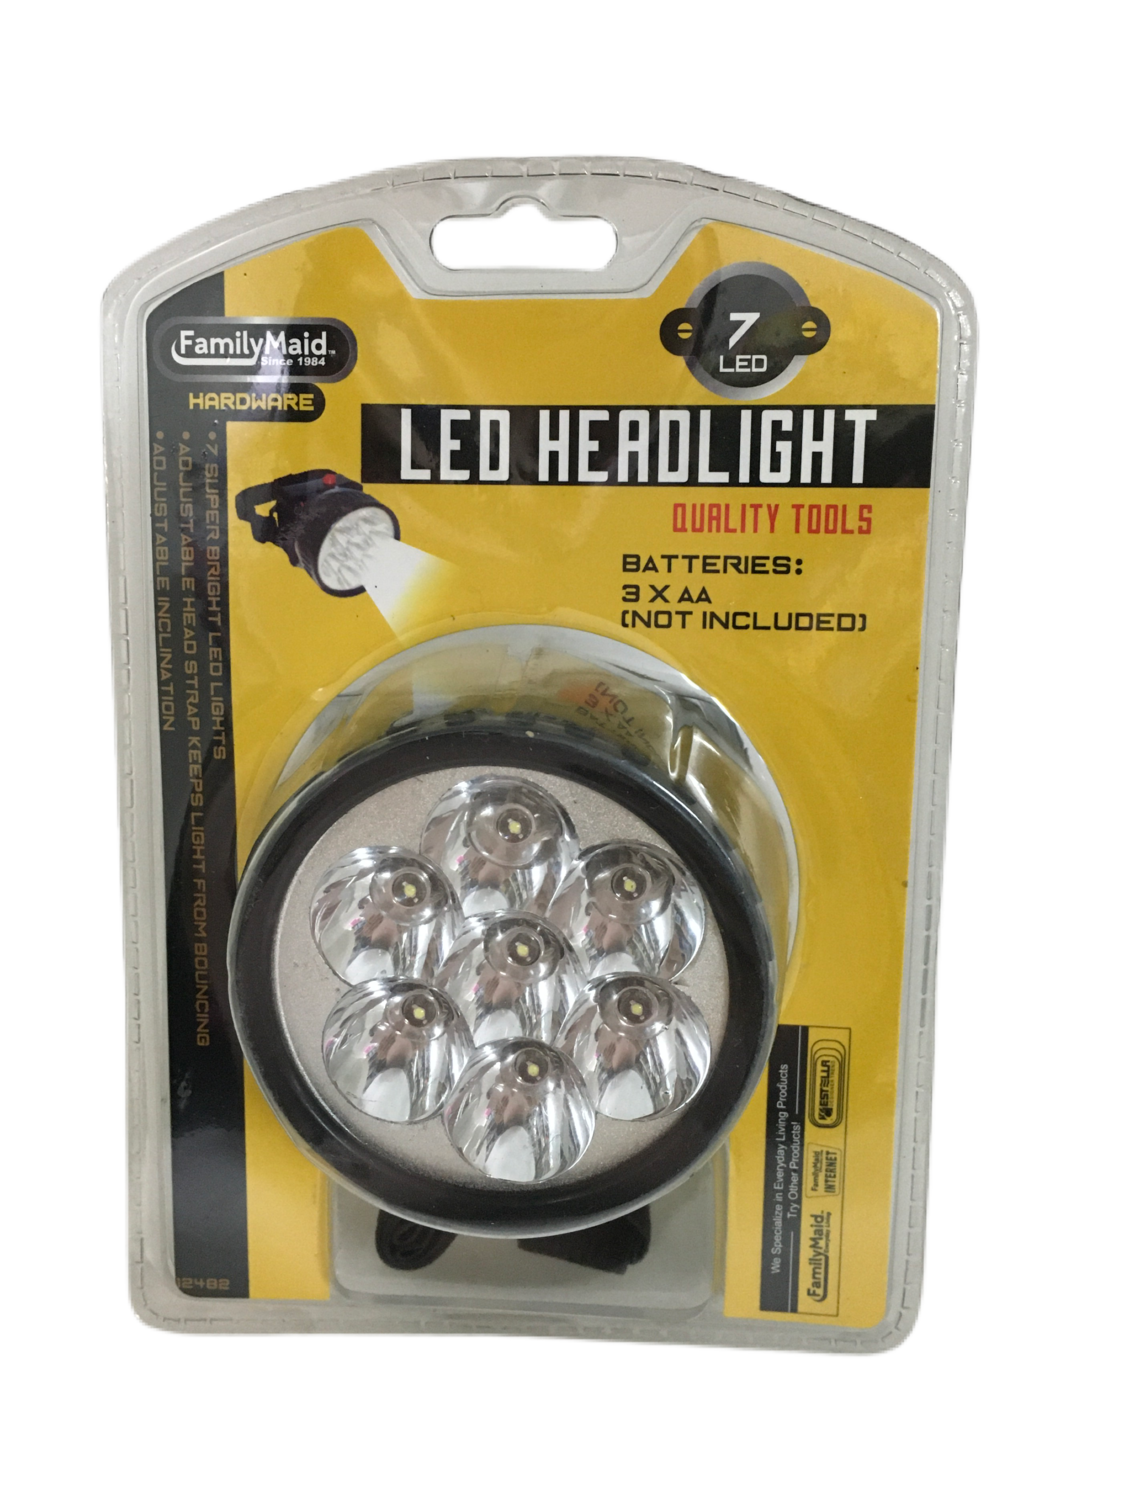 Led Headlight